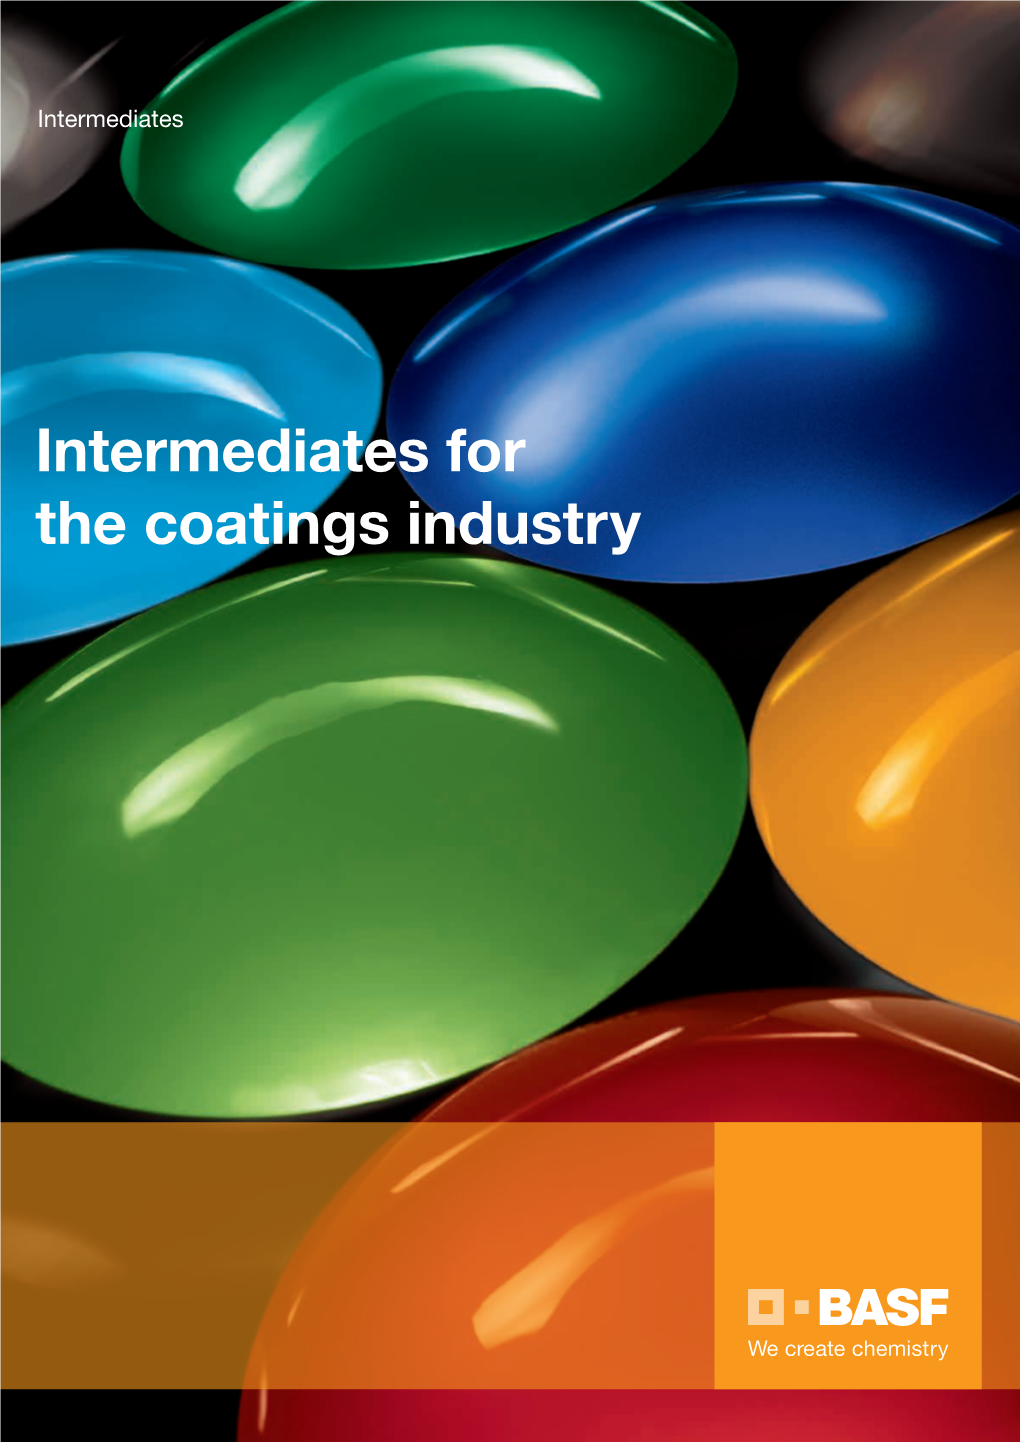 BASF Intermediates for Coatings Industry